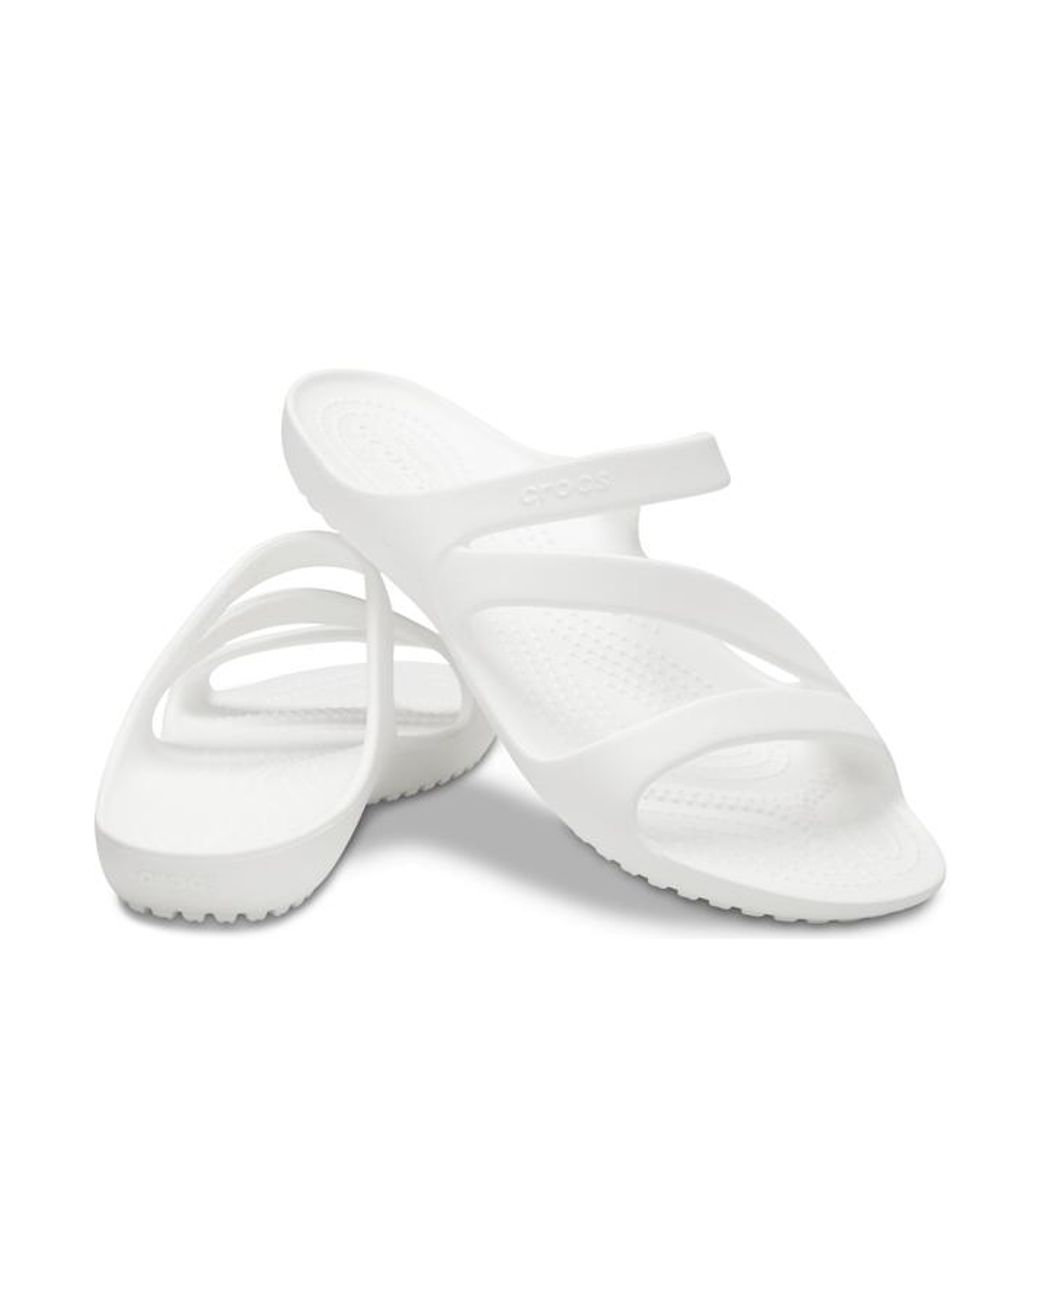 Crocs™ Kadee Ii Sandal in White | Lyst